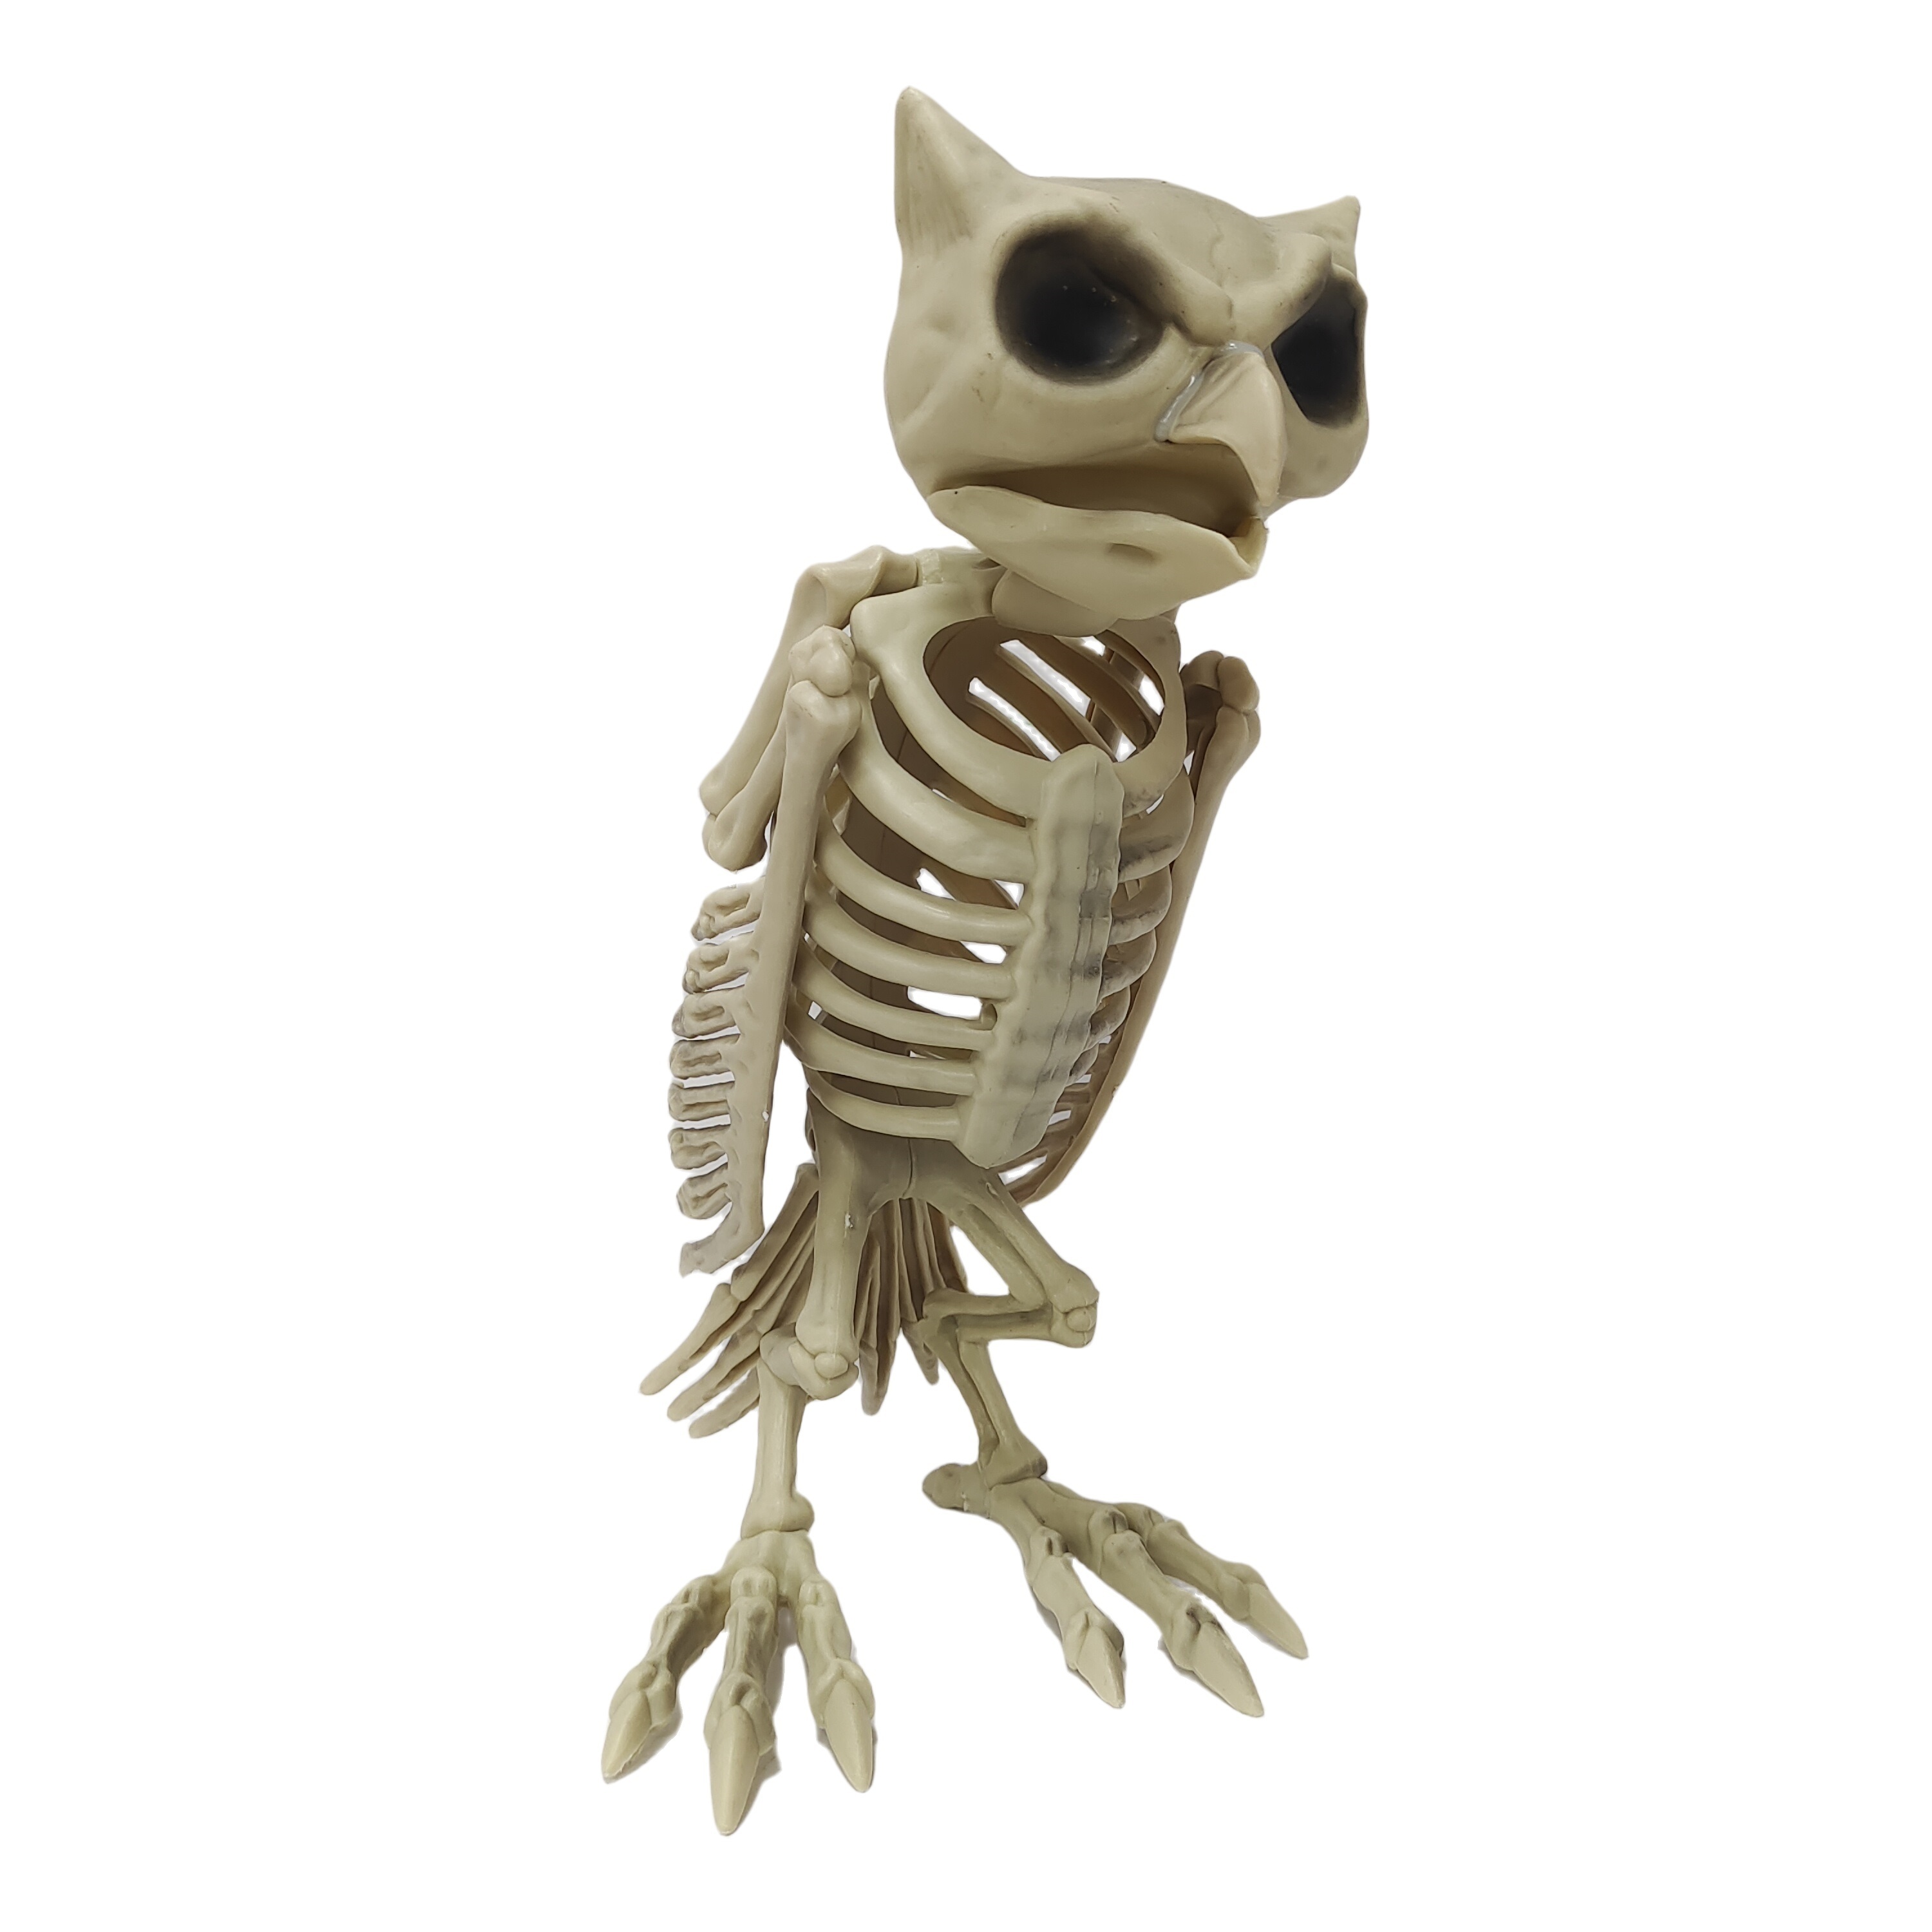 Winziges Bewegliches Skelett Plastikskelett Deko Mini Requisiten